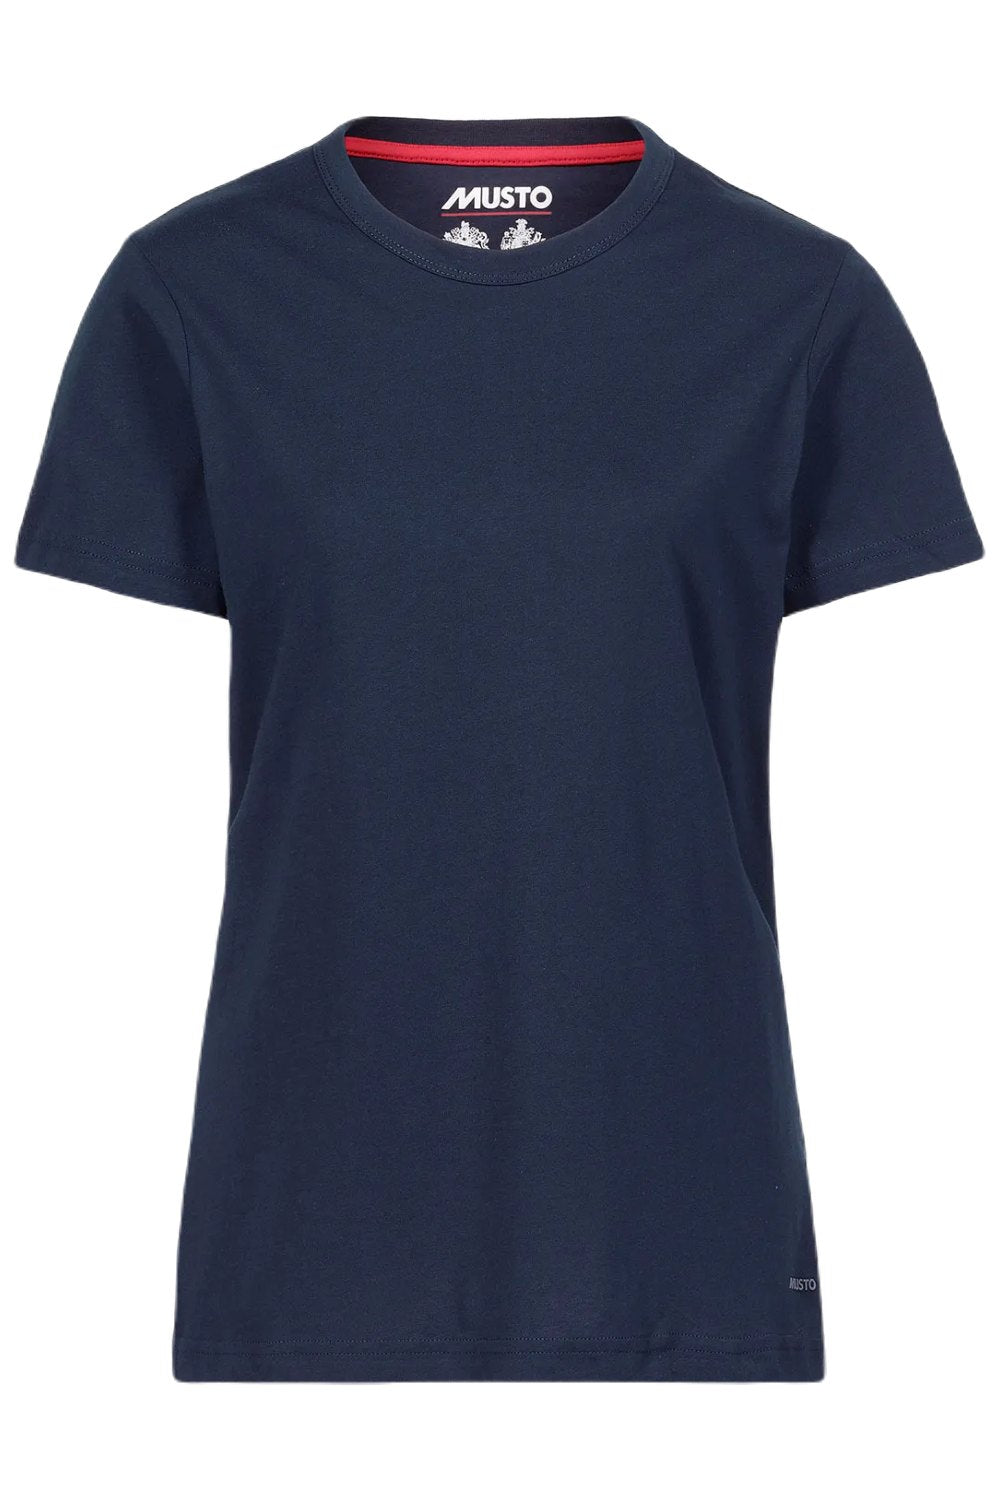 Musto Womens Essentials T-Shirt In Navy